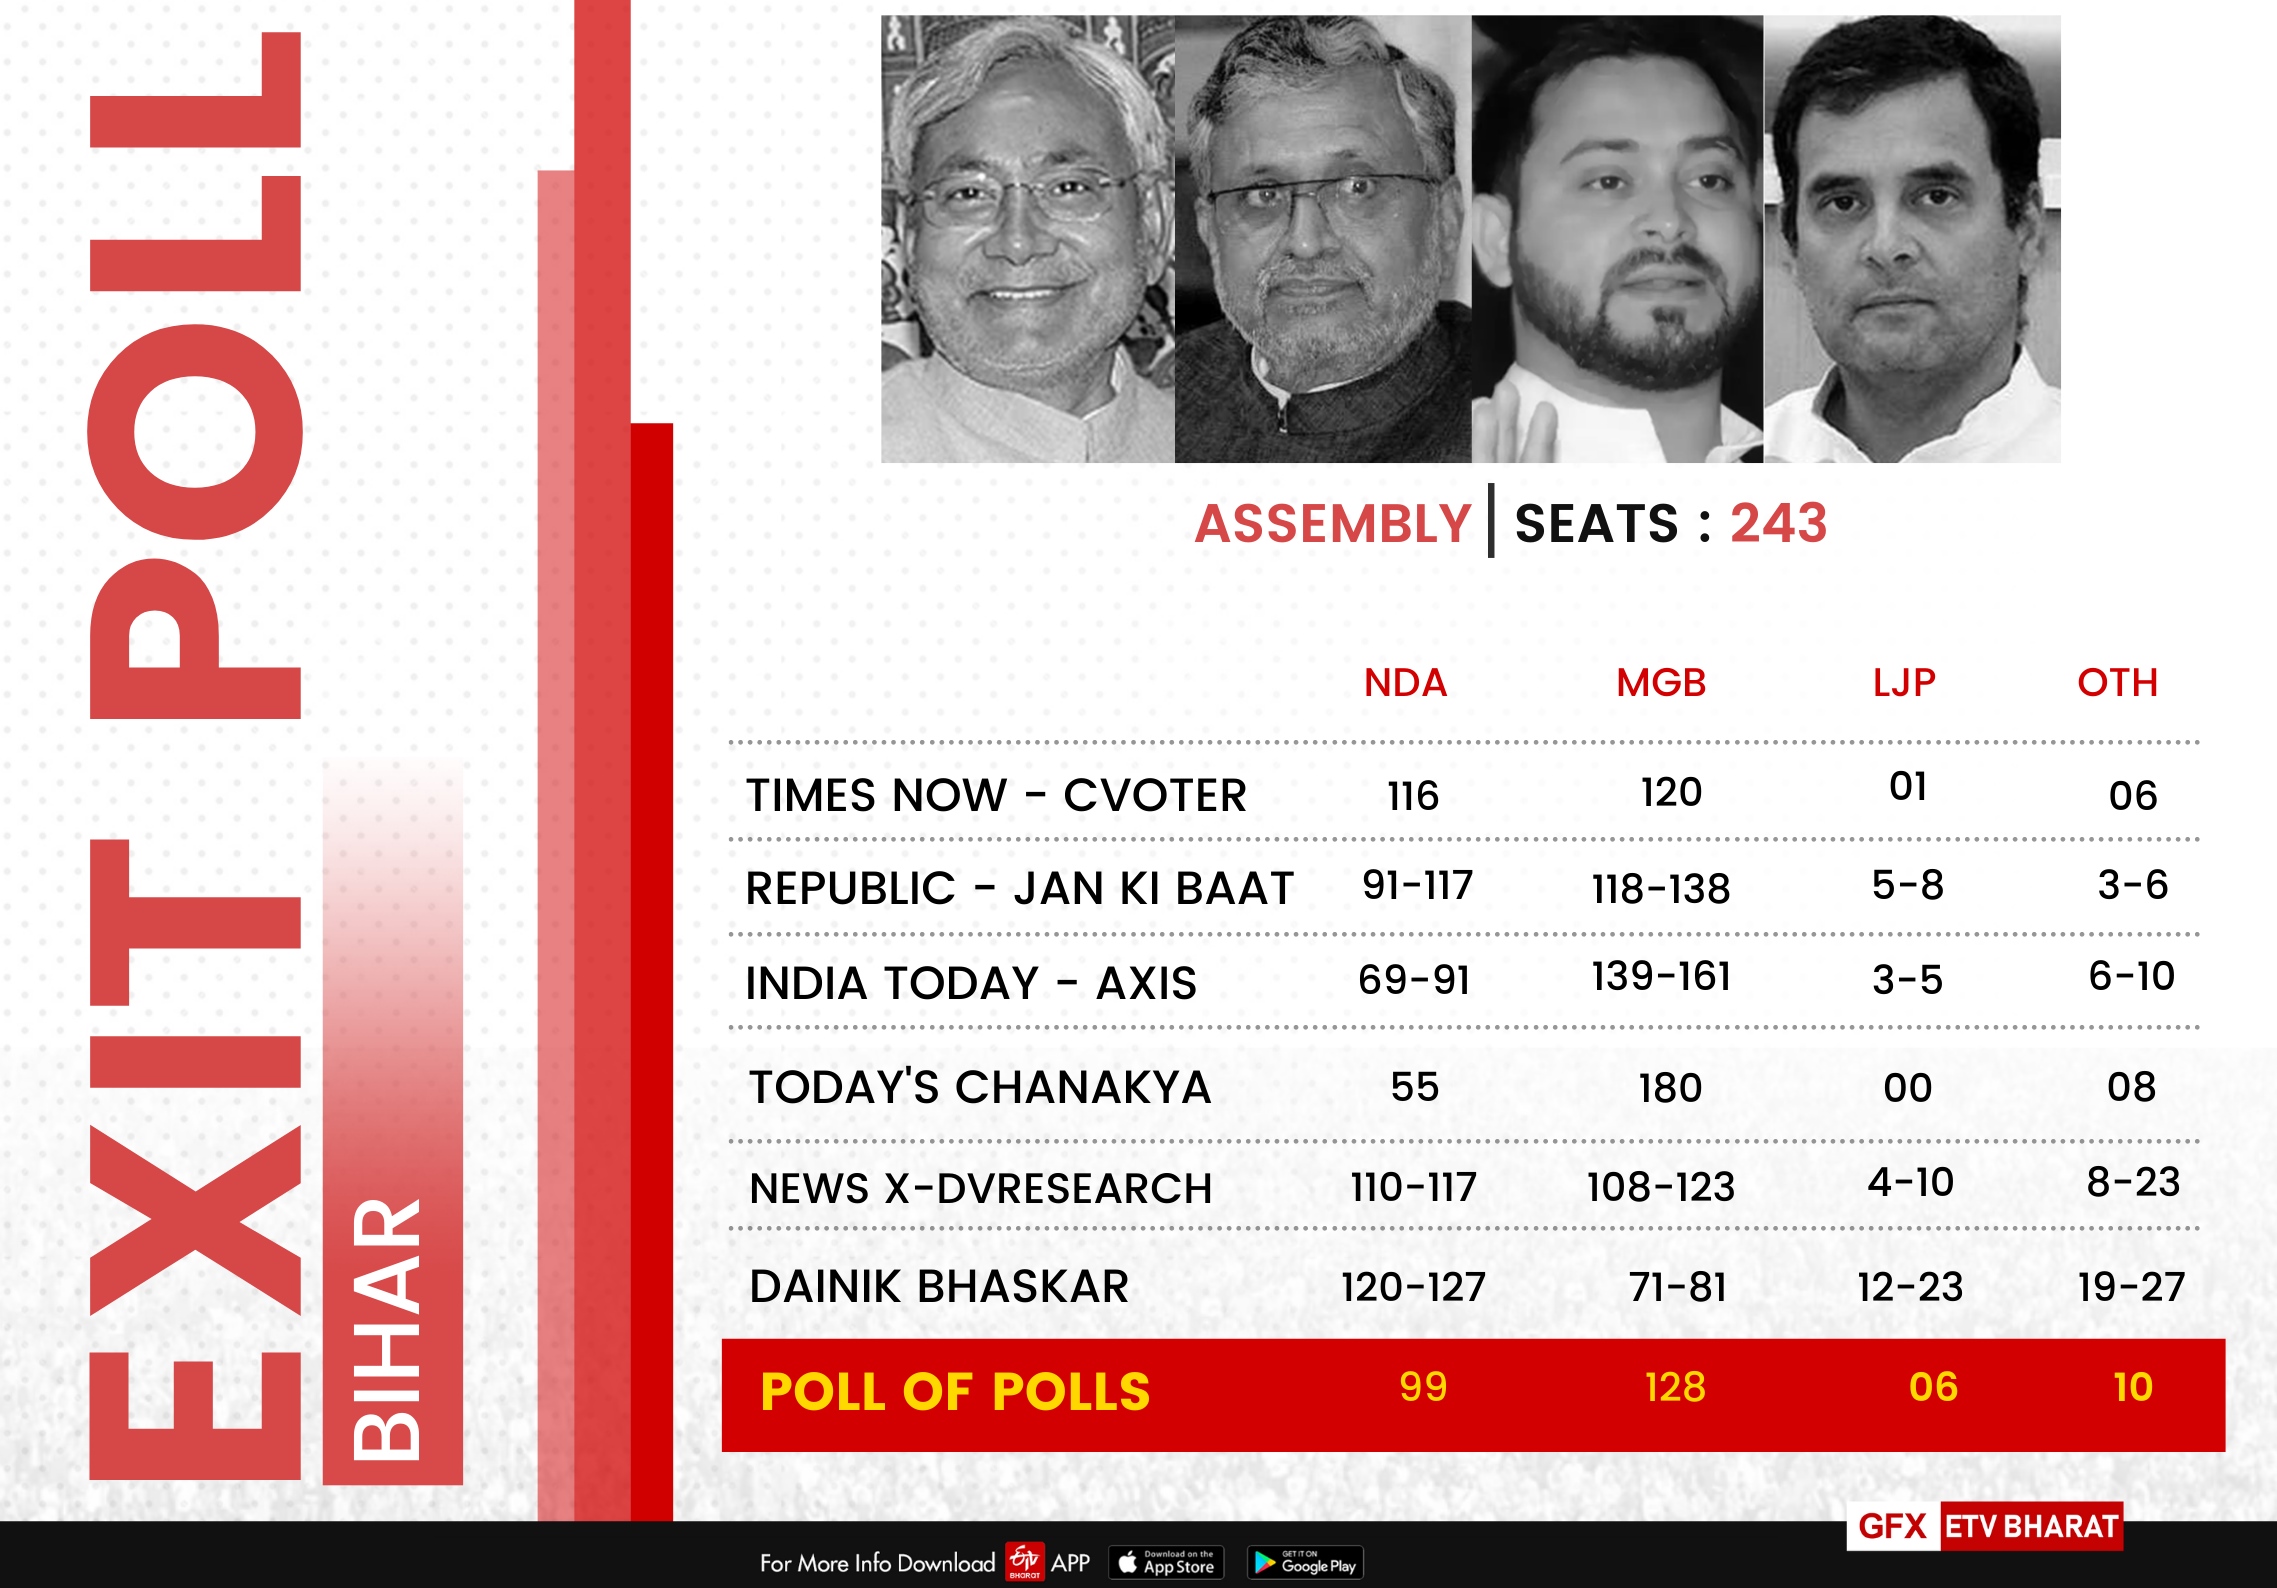 Exit polls gave the advantage to the Mahagathbandhan